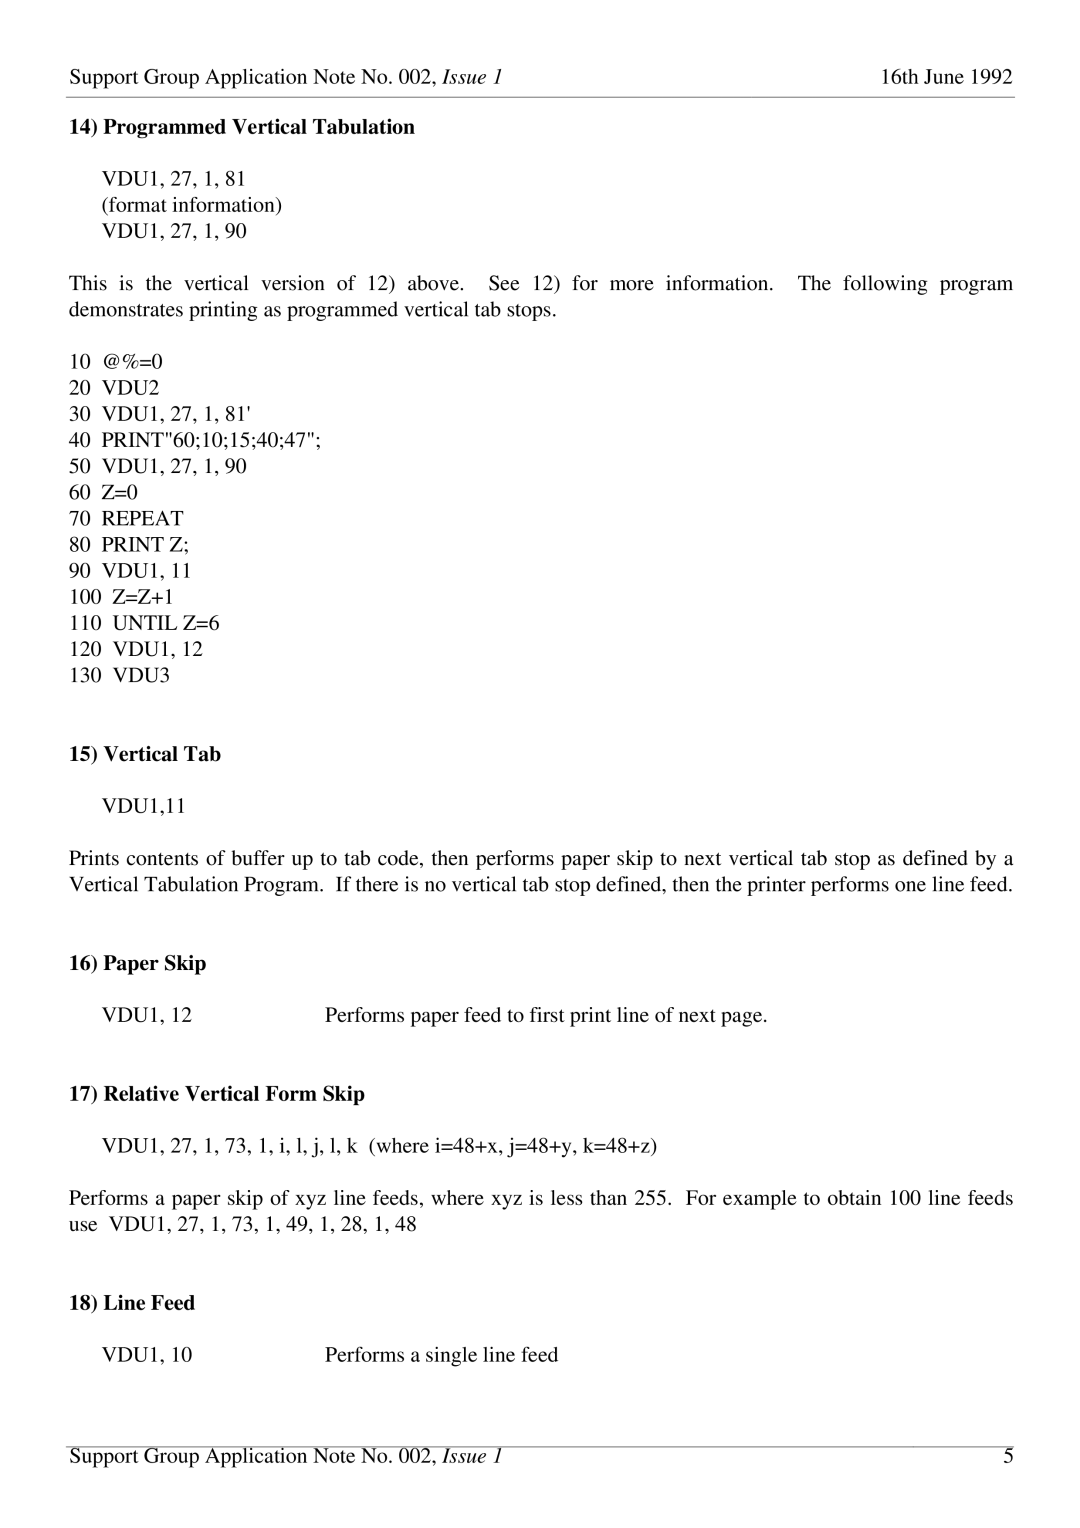 Olivetti JP101 Programmed Vertical Tabulation, Vertical Tab VDU1,11, Paper Skip, Relative Vertical Form Skip, Line Feed 